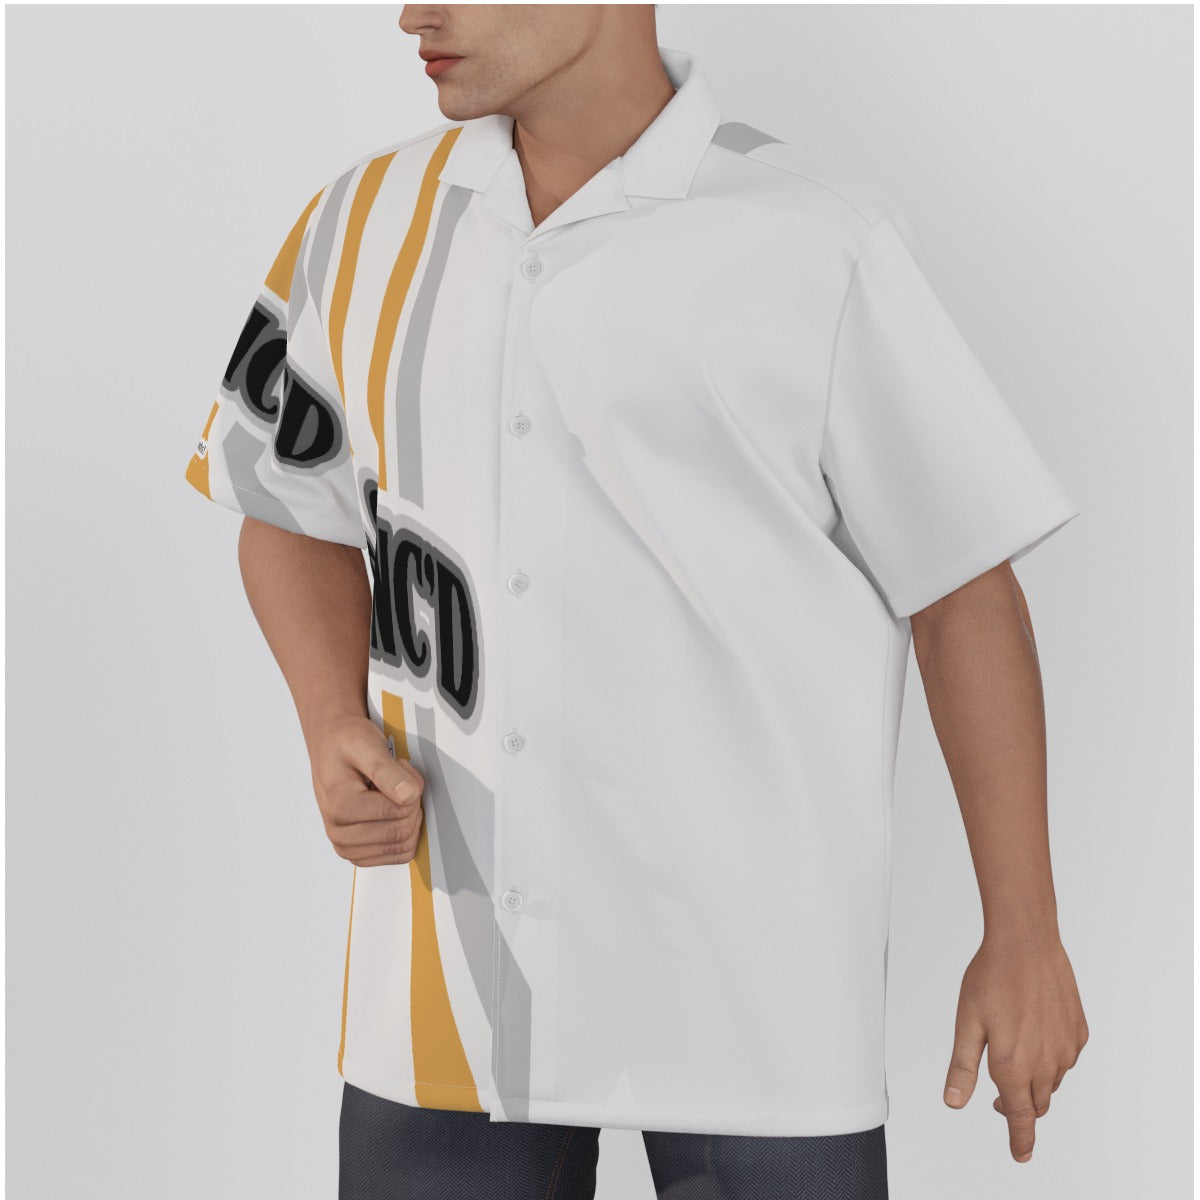 G-Inc'd Bowling Shirt White